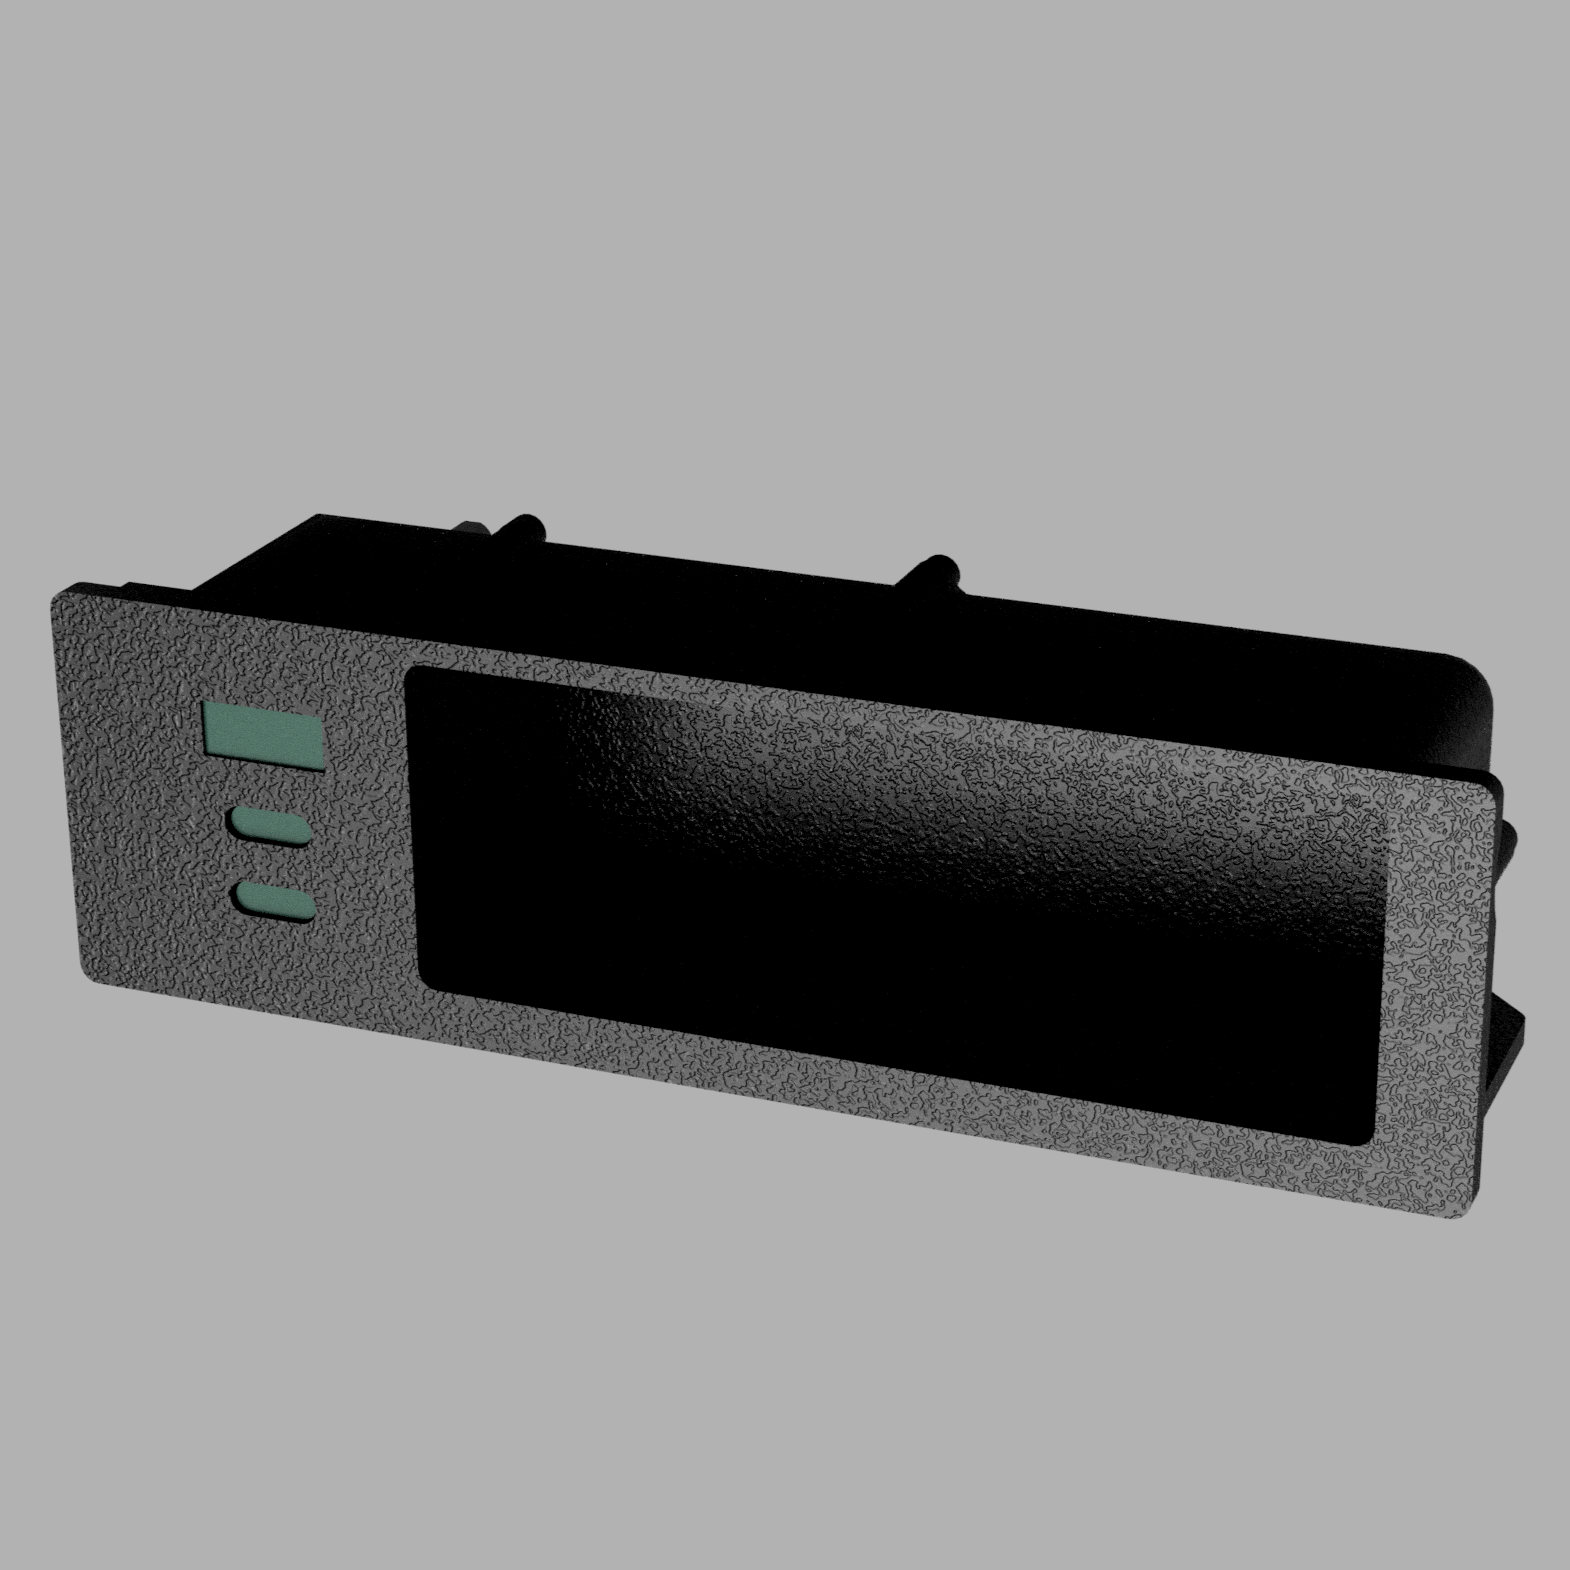 E46 dual usb port fast charge voltmeter gauge pod